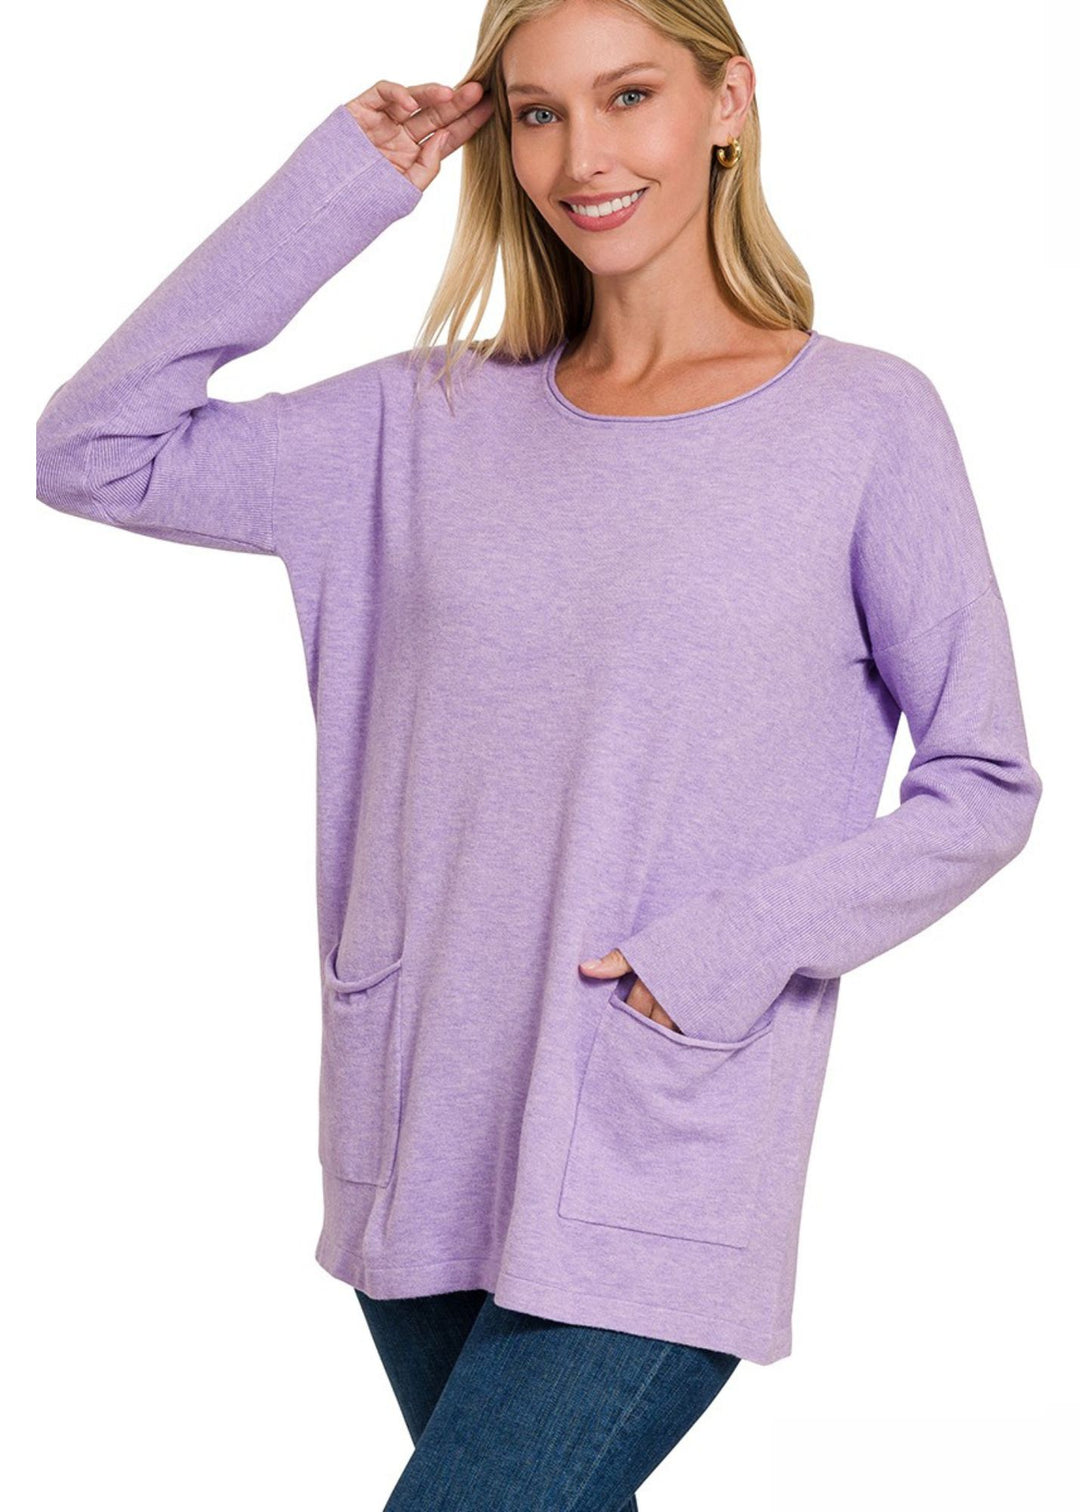 Zen Lightweight Pocket Sweater (Lavender)